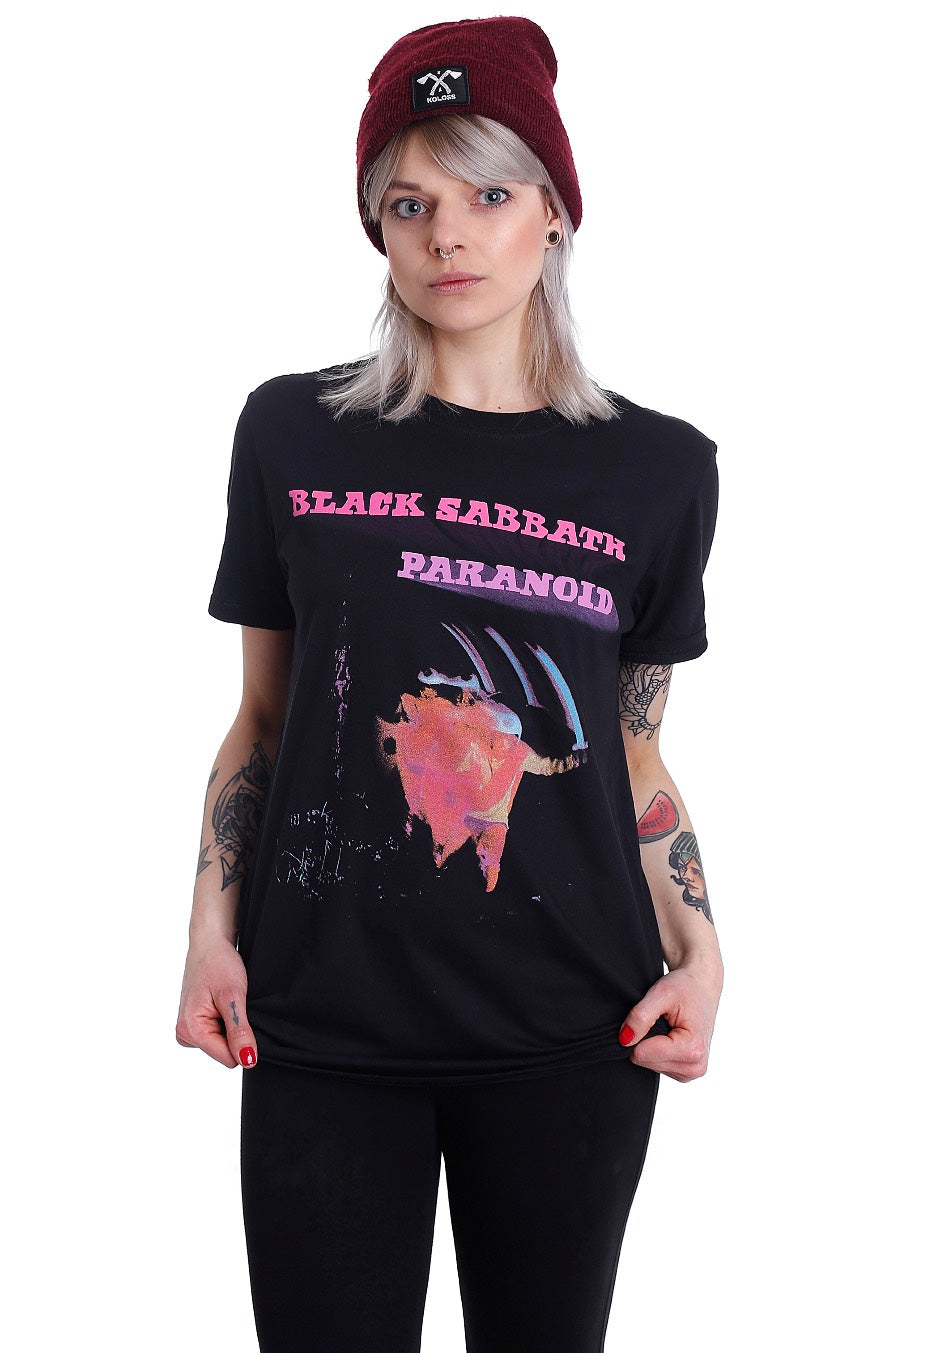 Black Sabbath Paranoid Tee